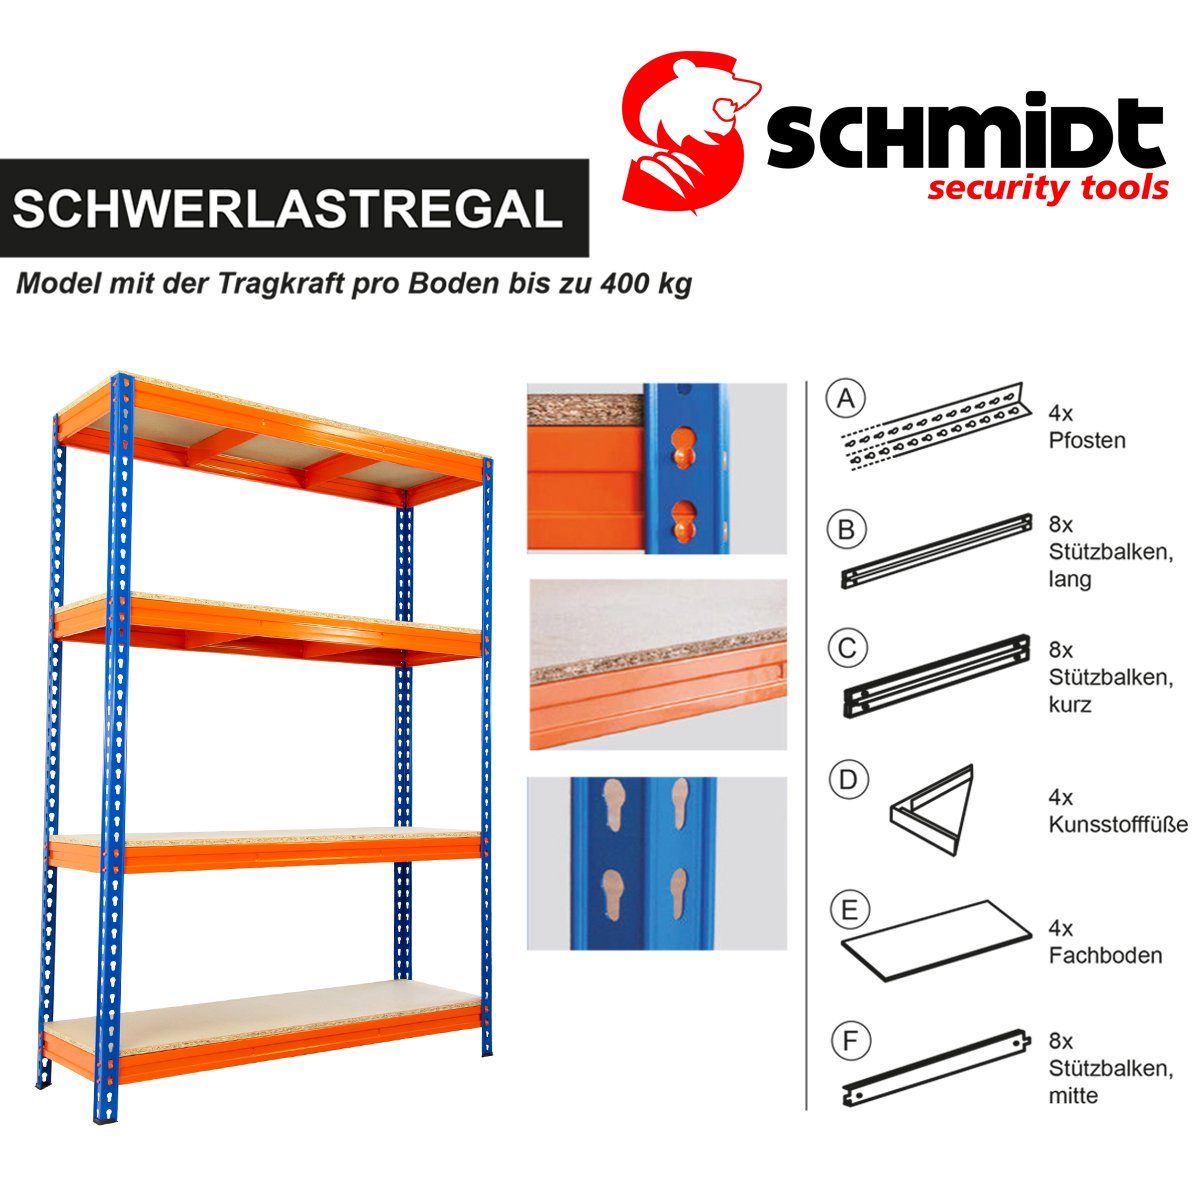 SCHMIDT security tools Steckregal Schwerlastregal Boden pro 400kg Schwerlastregal 180x120x45cm